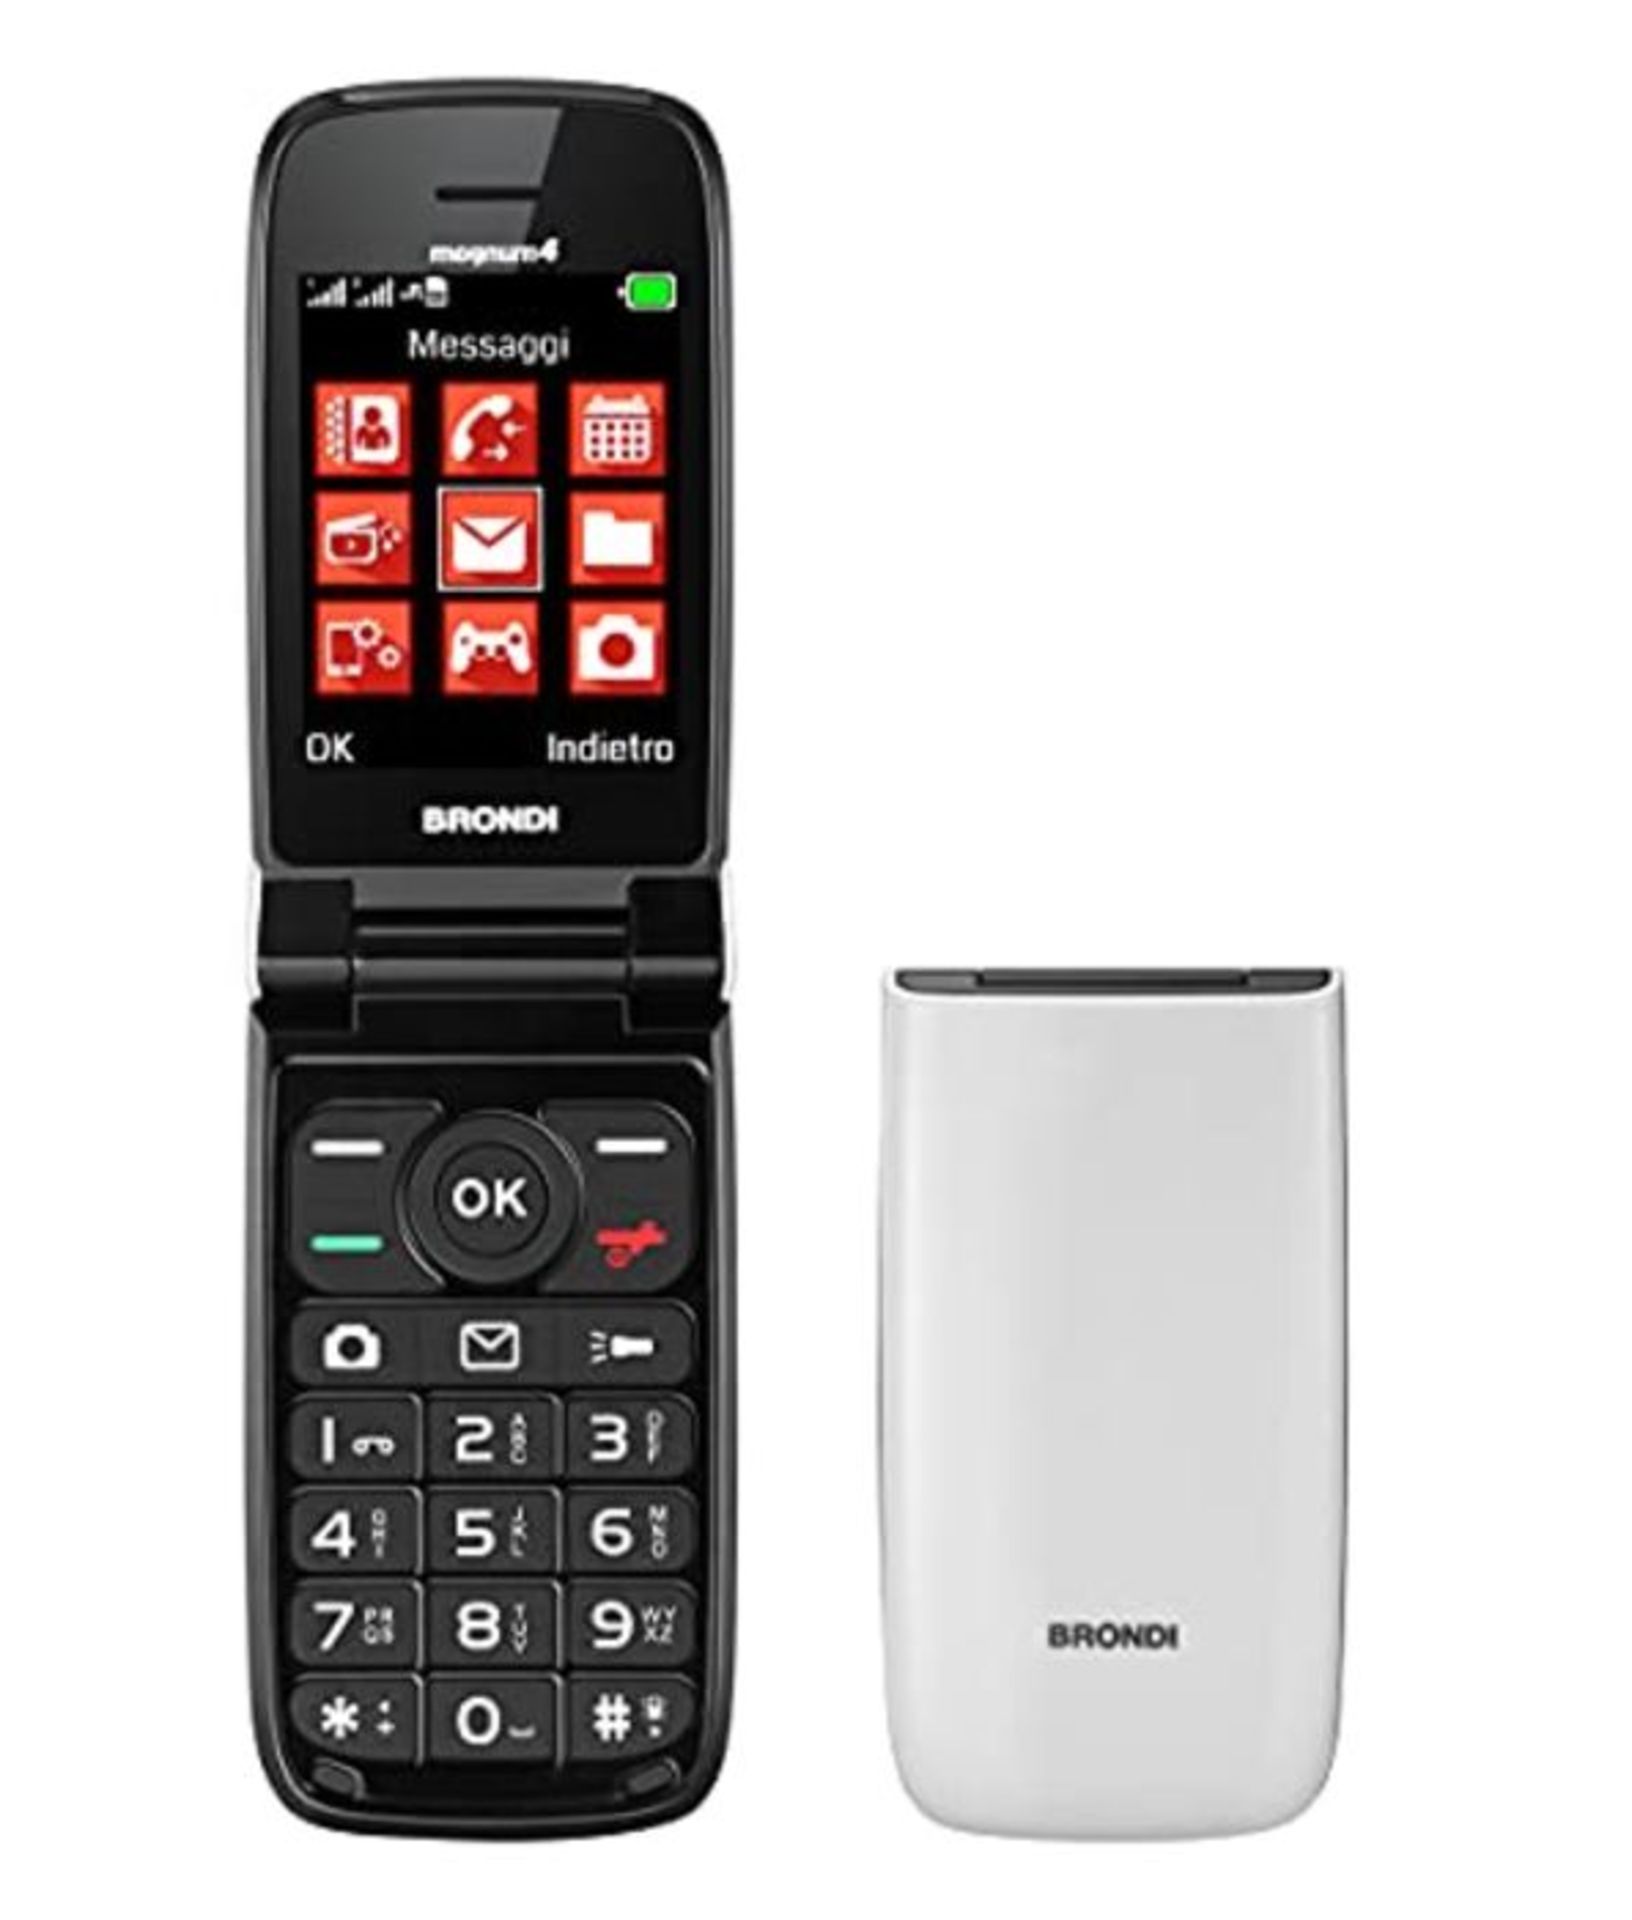 Brondi Magnum 4 Telefono Cellulare Maxi Display, Tastiera Fisica Retroilluminata, Dual